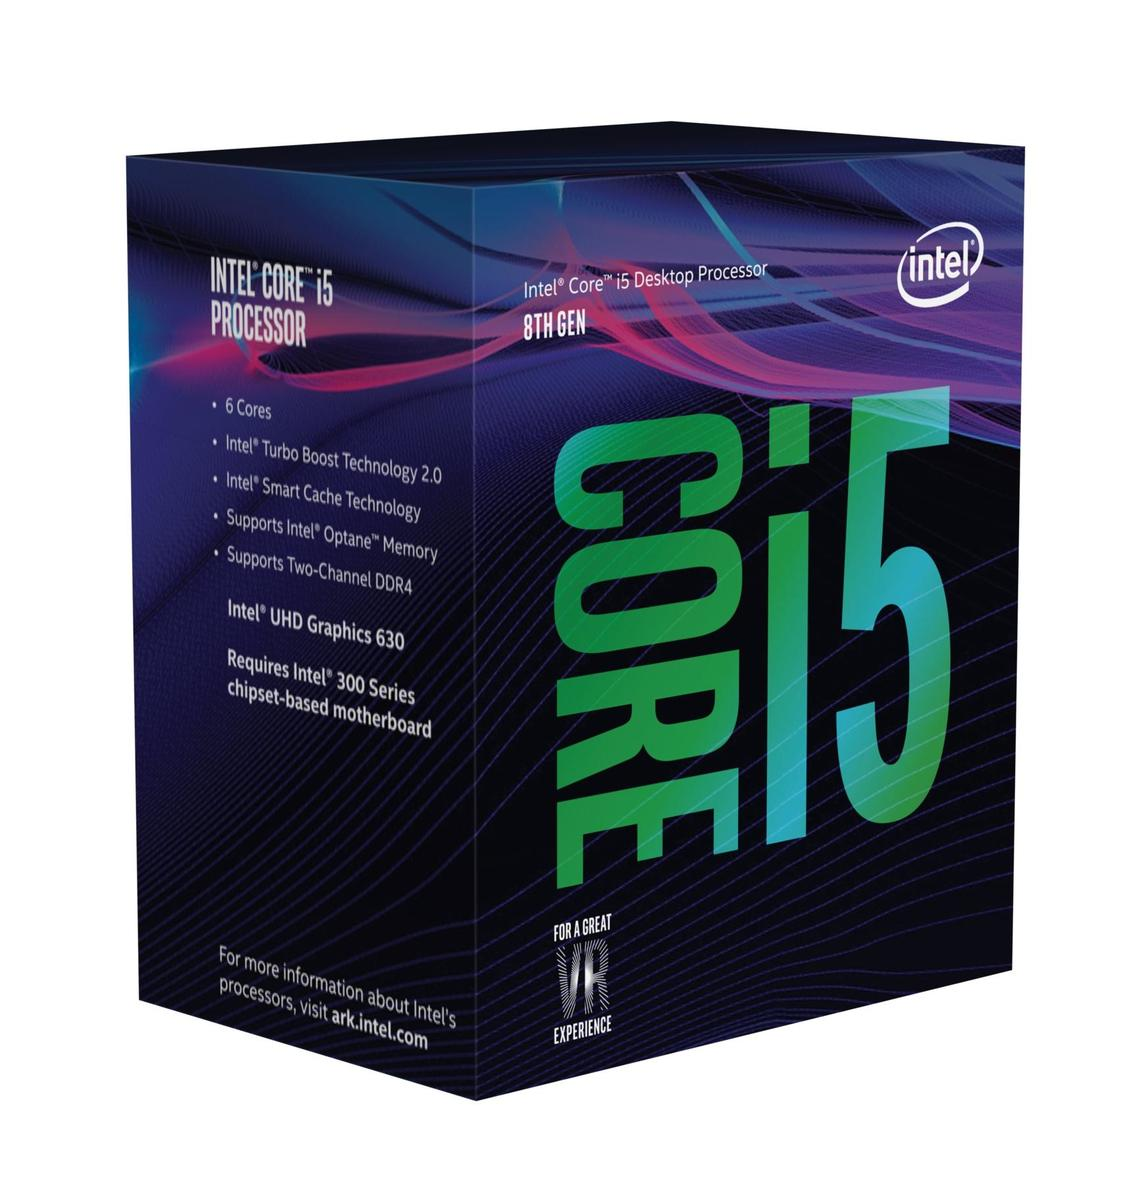 Intel Core i5-8500, Processor benchmarks